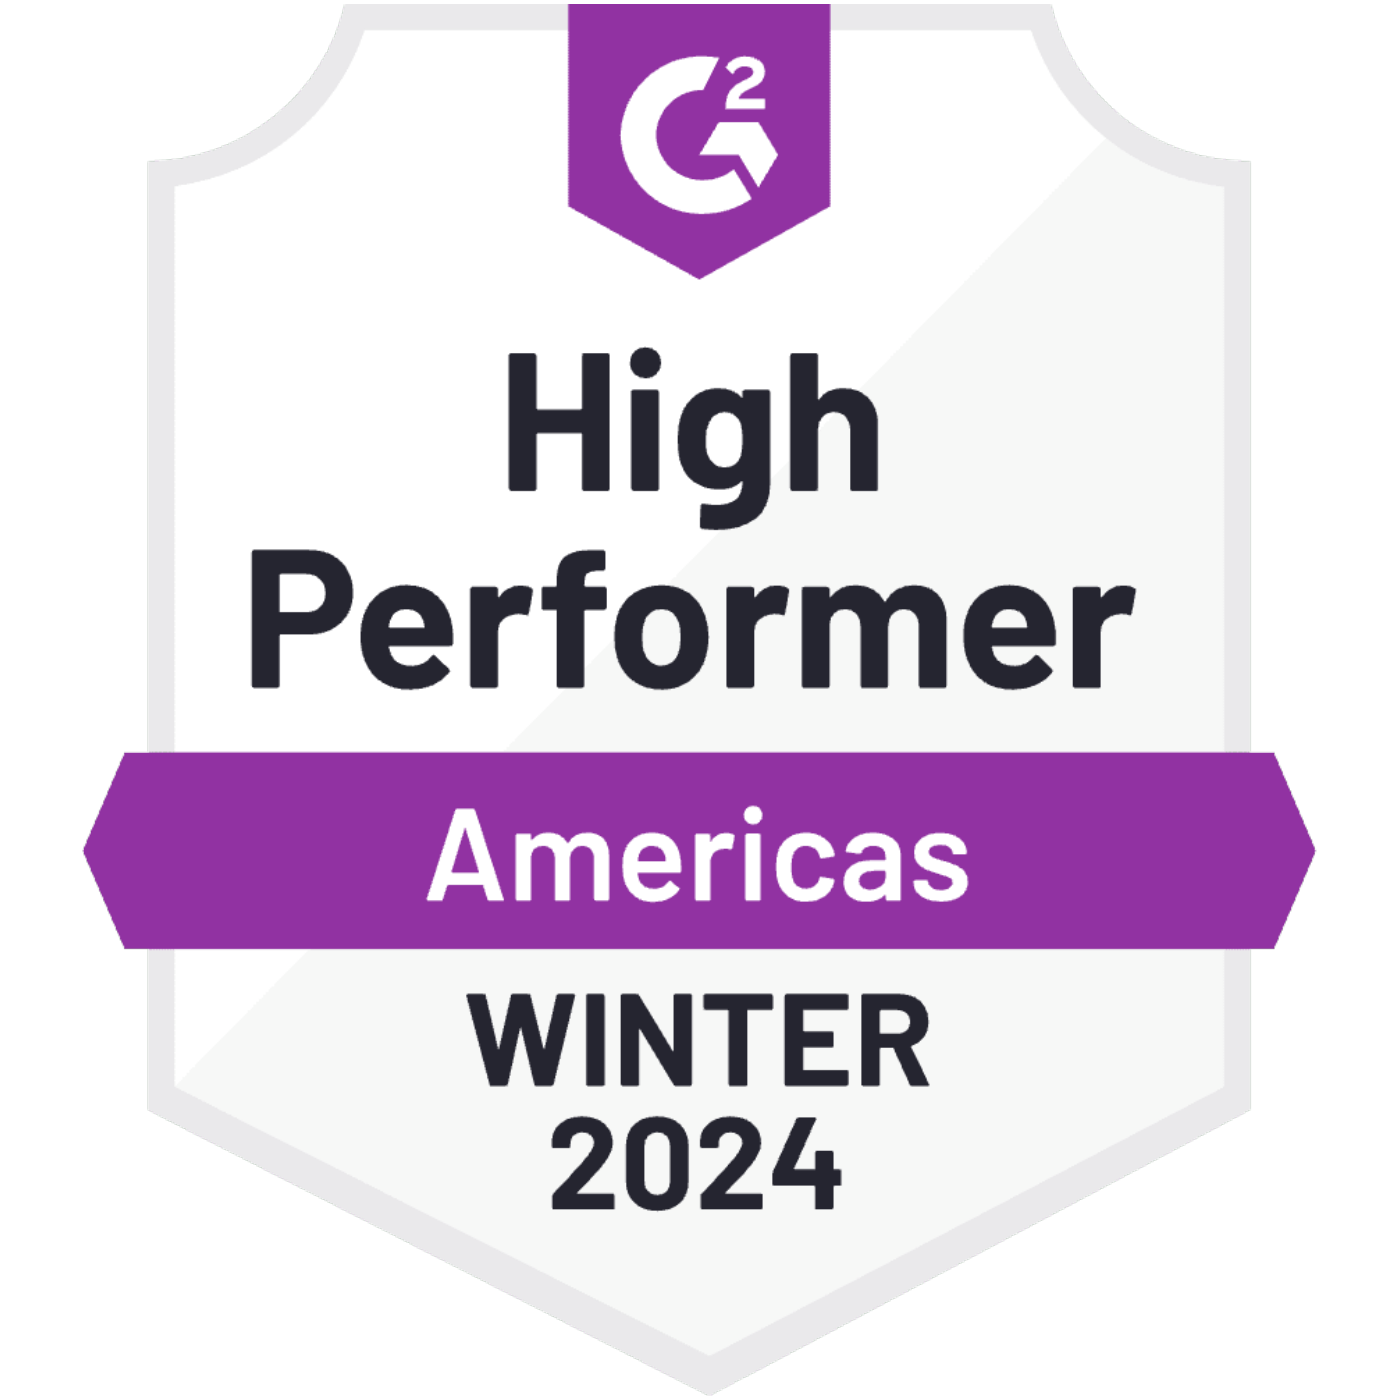 G2 Badge: High Performer Americas Winter 2024